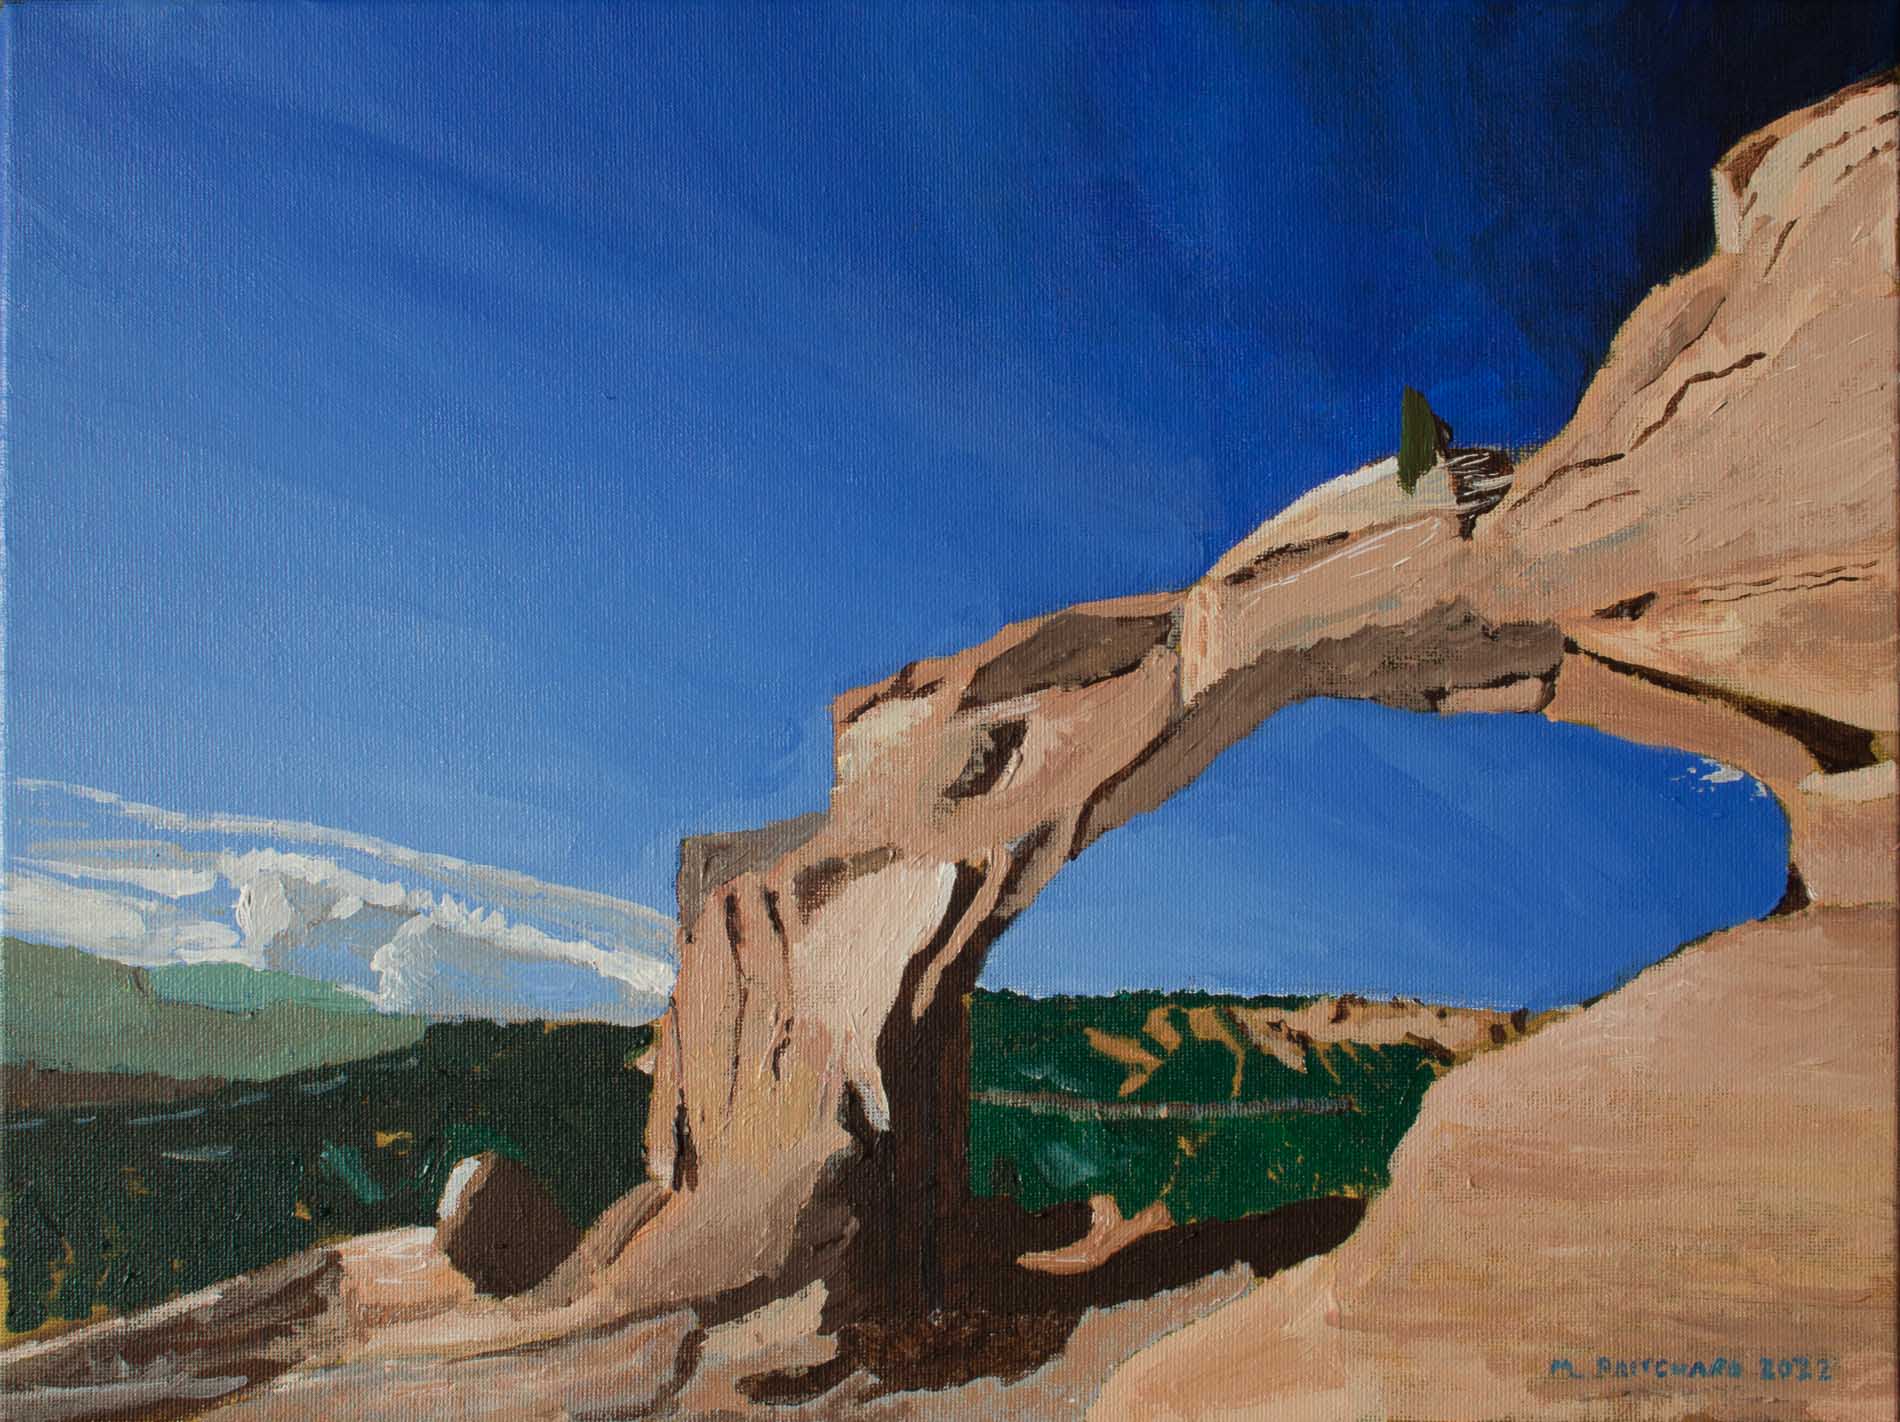 Acrylic painting of Broken Arch, Utah